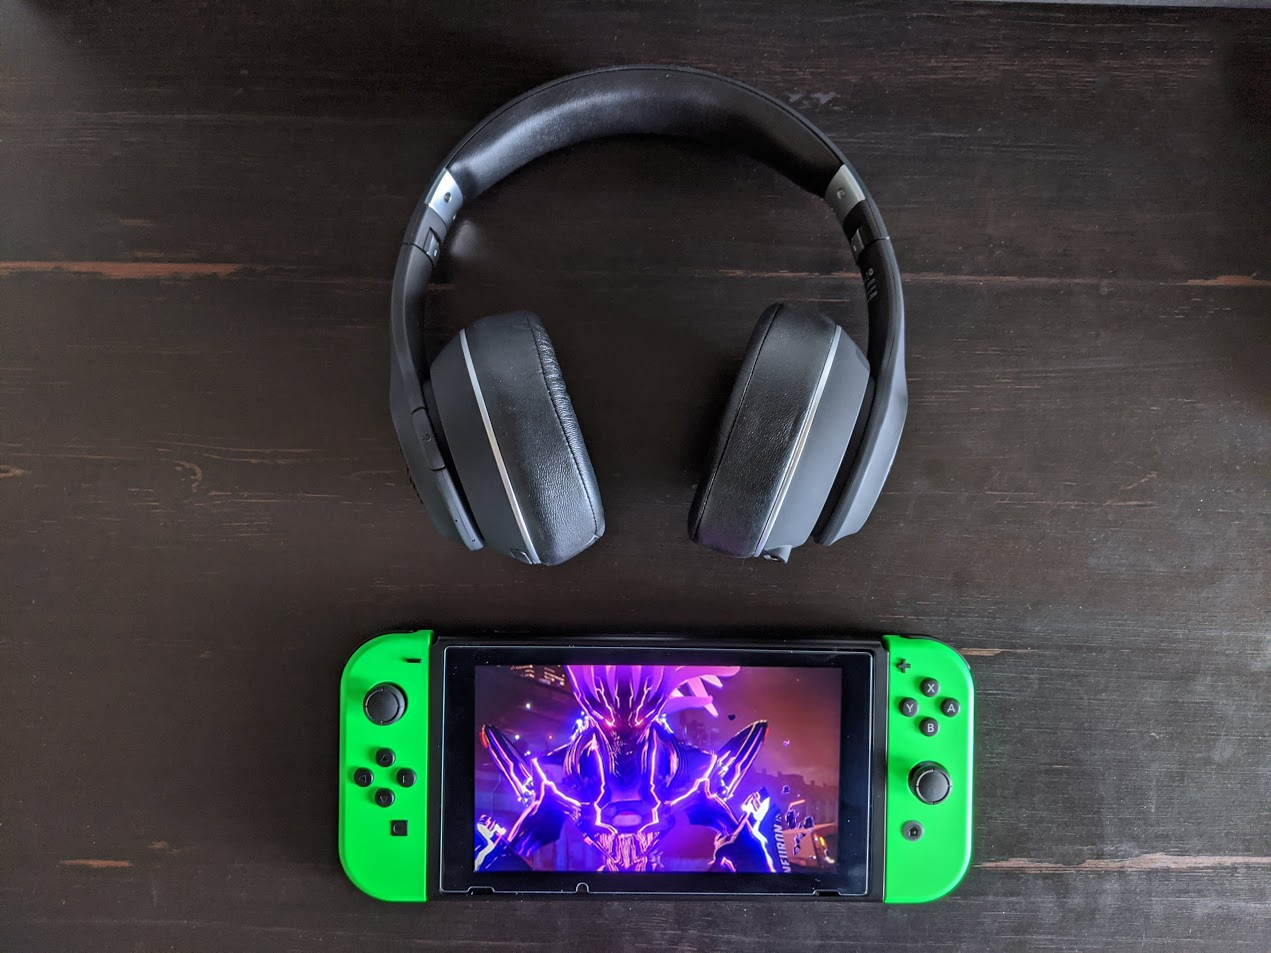 Bluetooth headphones and Nintendo Switch